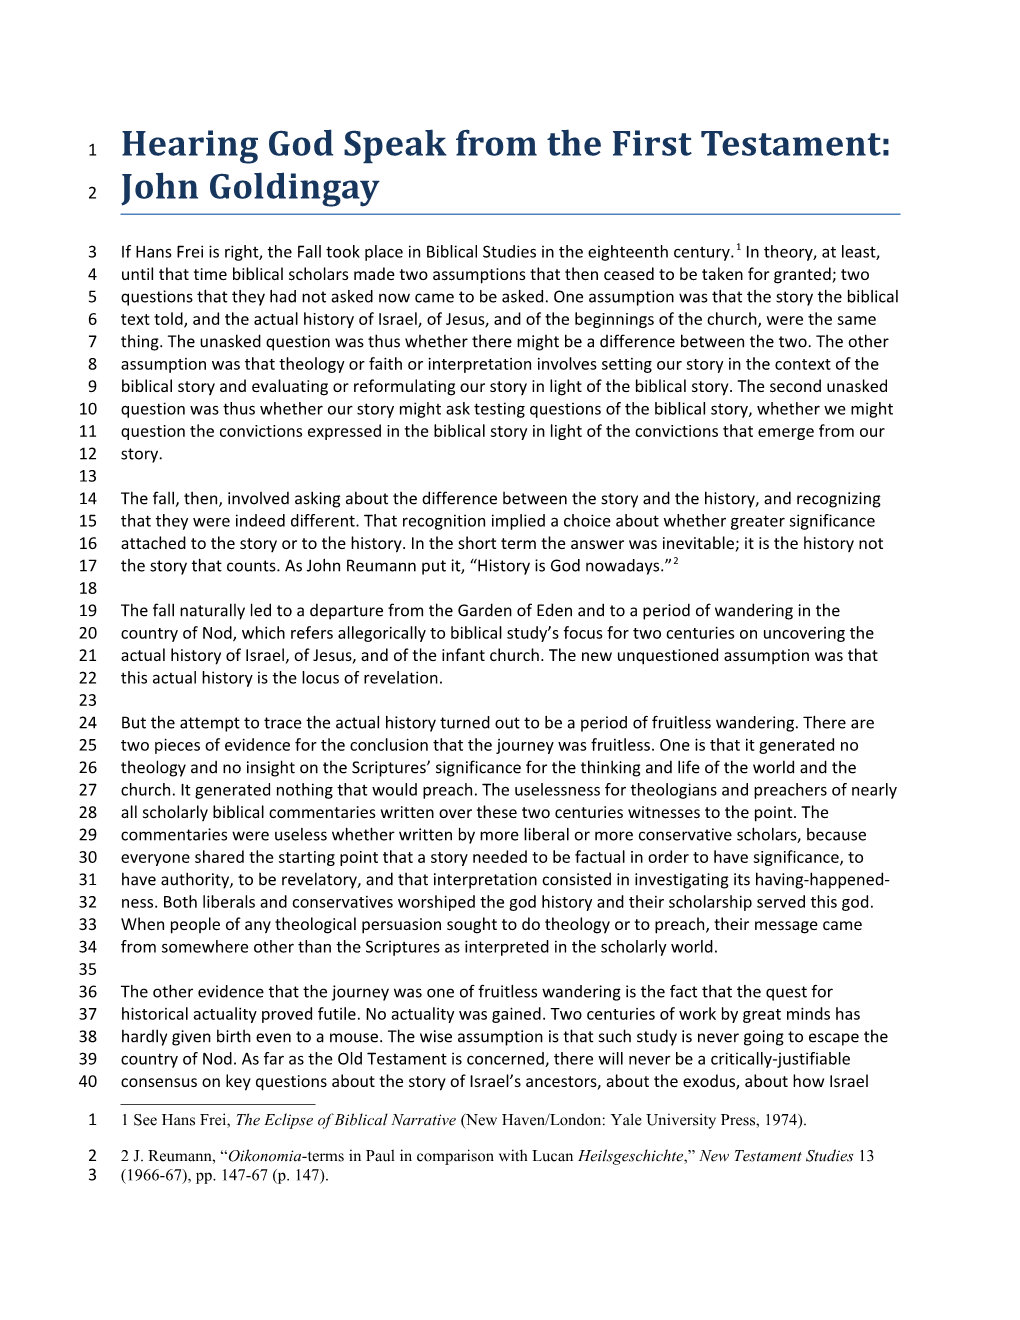 Hearing God Speak from the First Testament: John Goldingay